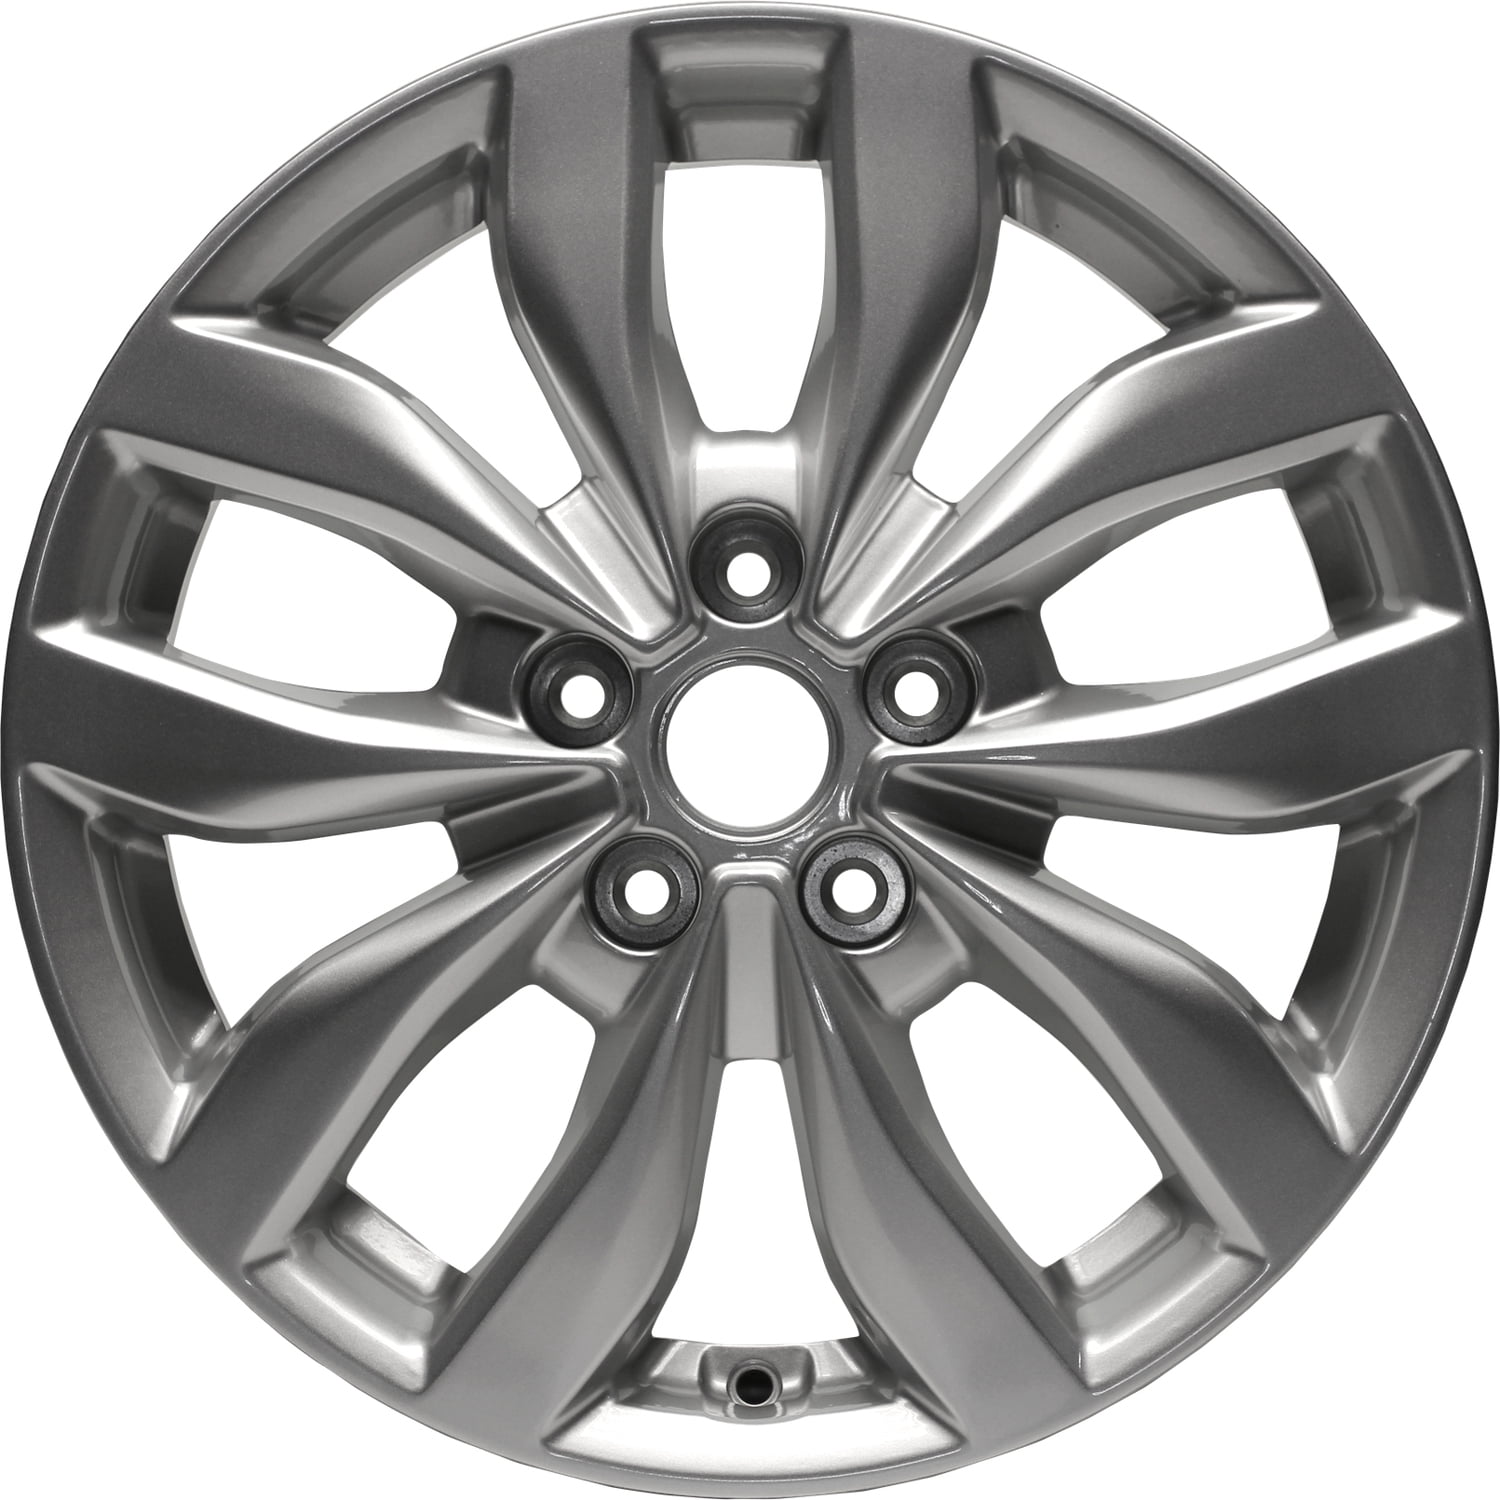 Kai 17 X 6.5 Reconditioned OEM Aluminum Alloy Wheel, All Painted Sparkle  Silver Metallic, Fits 2014 - 2015 Kia Optima